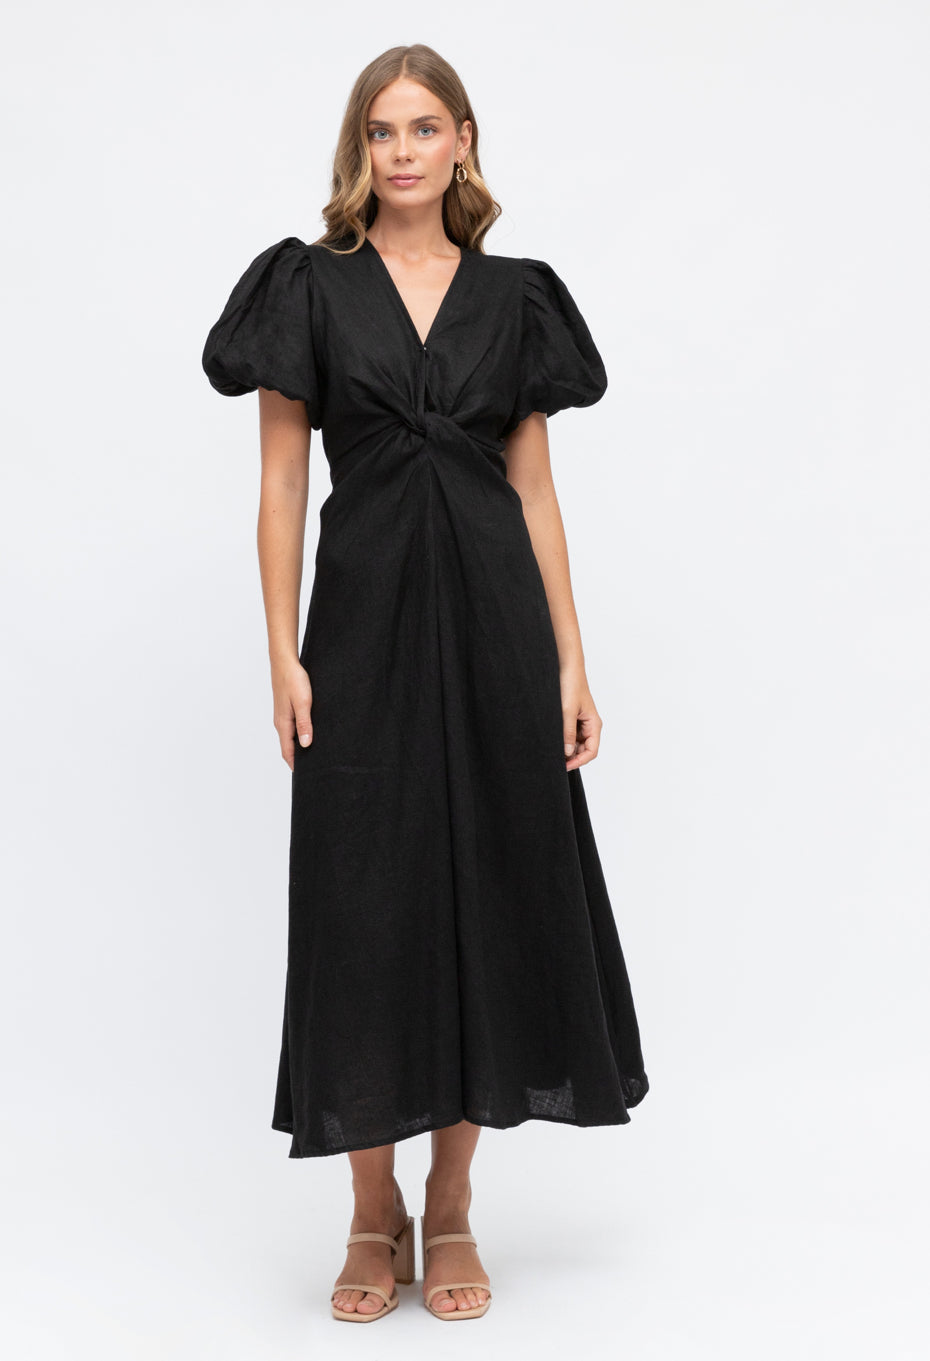 Chrystal Twist Black Linen Dress